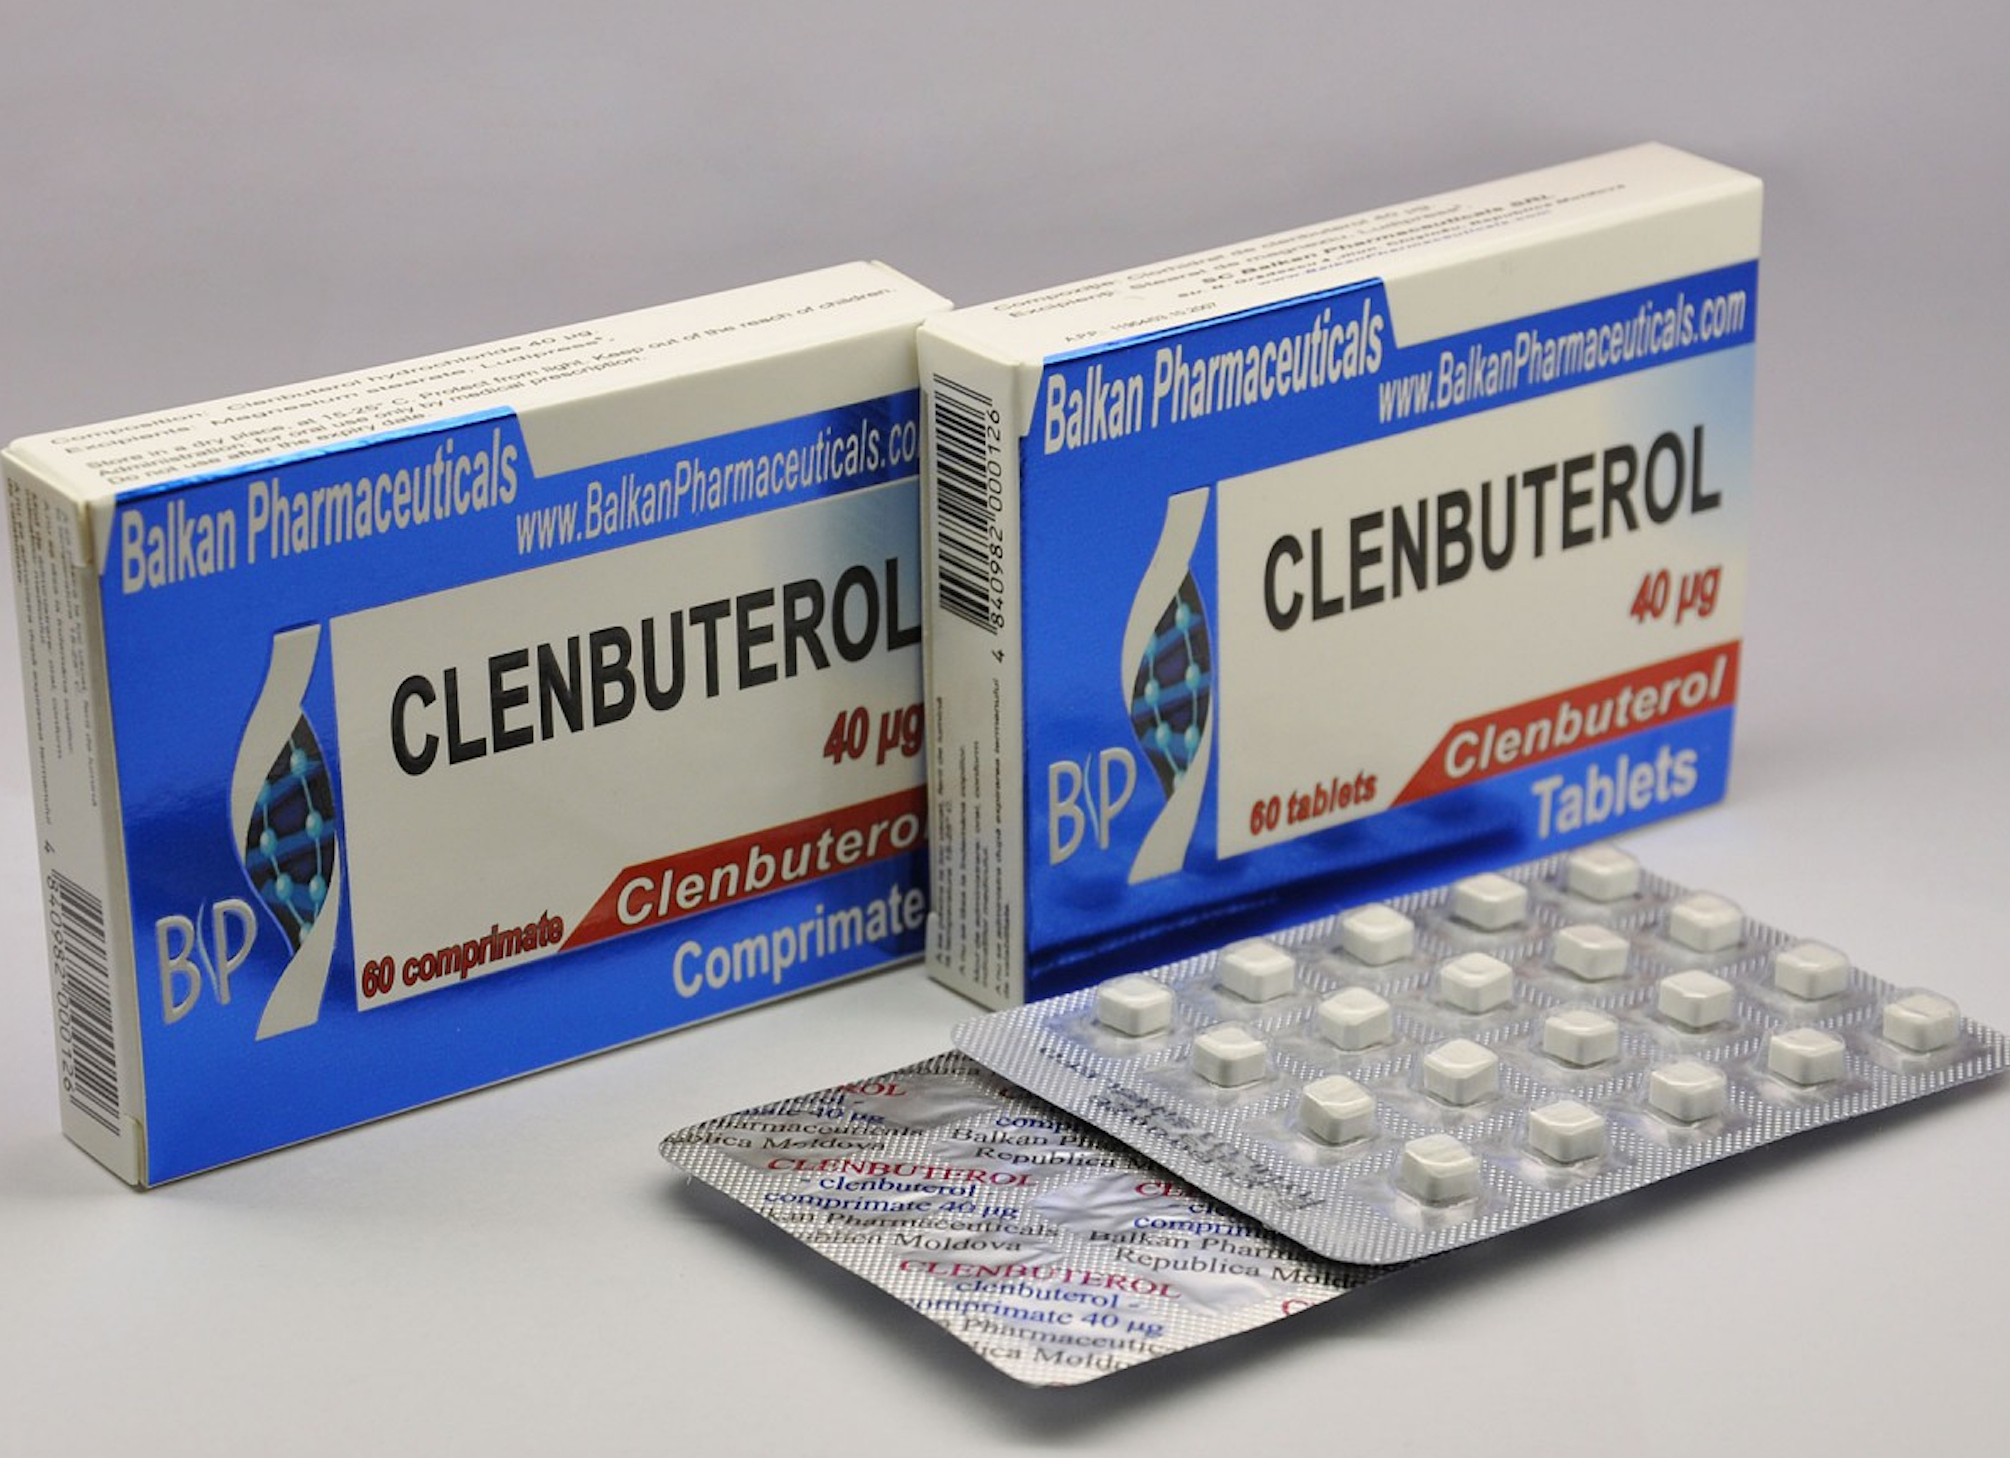 Clenbuterol by Balkan Pharmaceuticals